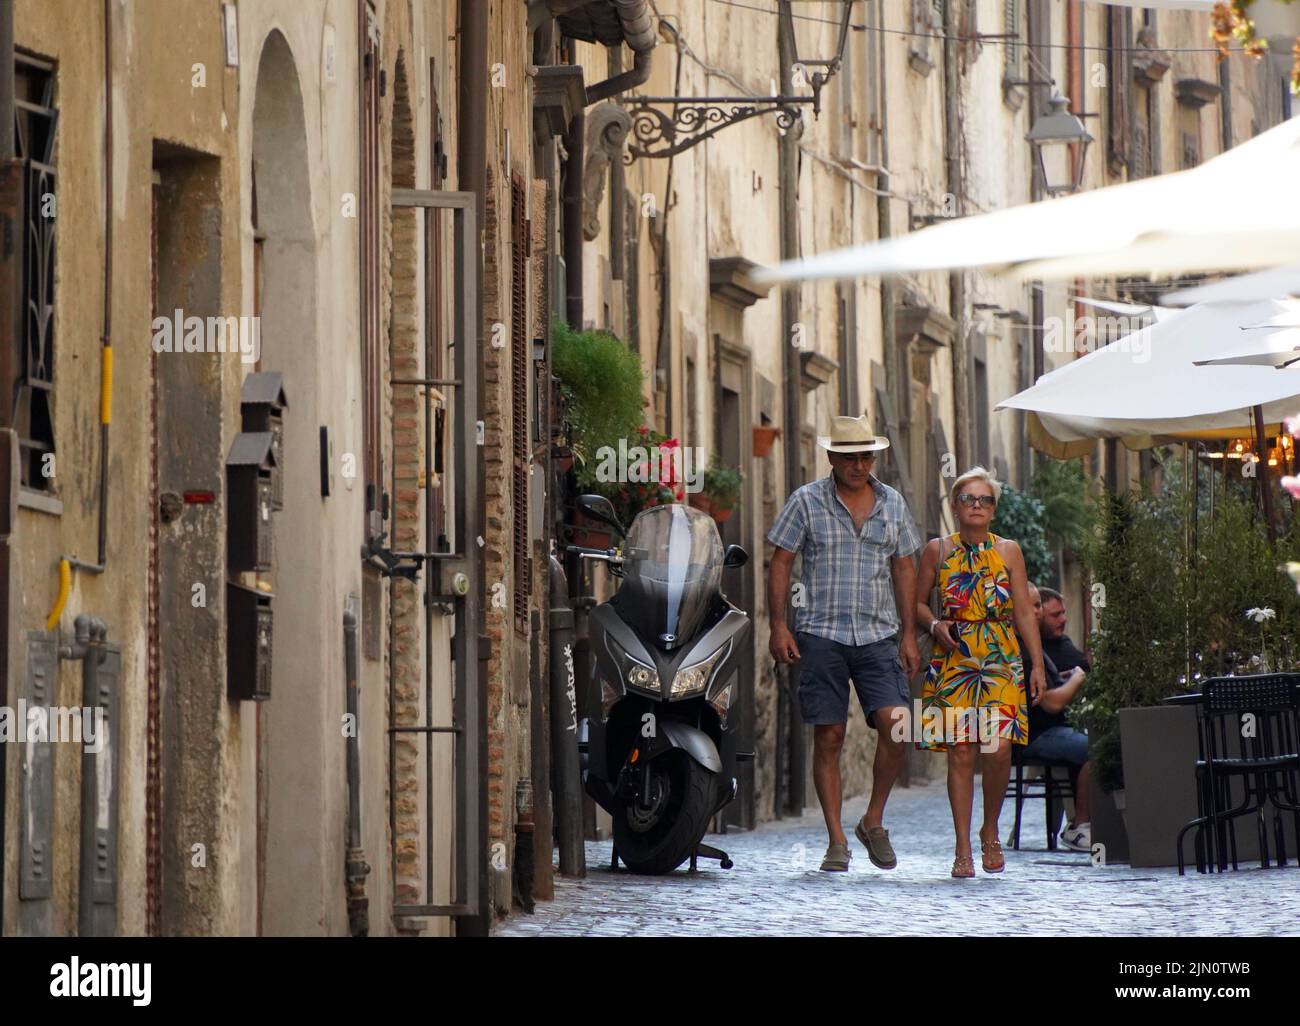 Bracciano. 7. August 2022. Touristen genießen Sightseeing in Bracciano, Italien am 7. August 2022. Quelle: Jin Mamengni/Xinhua/Alamy Live News Stockfoto